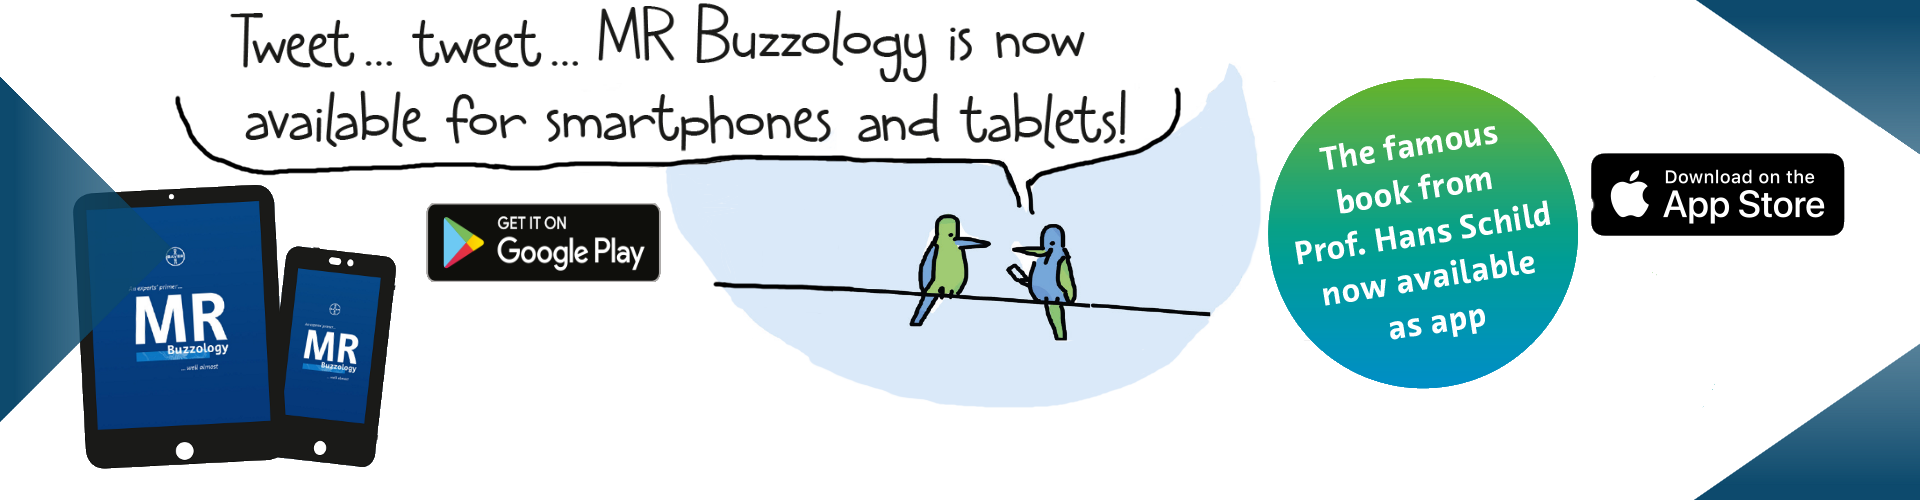 MRT für Kenner: 'Buzzology' als App verfügbar